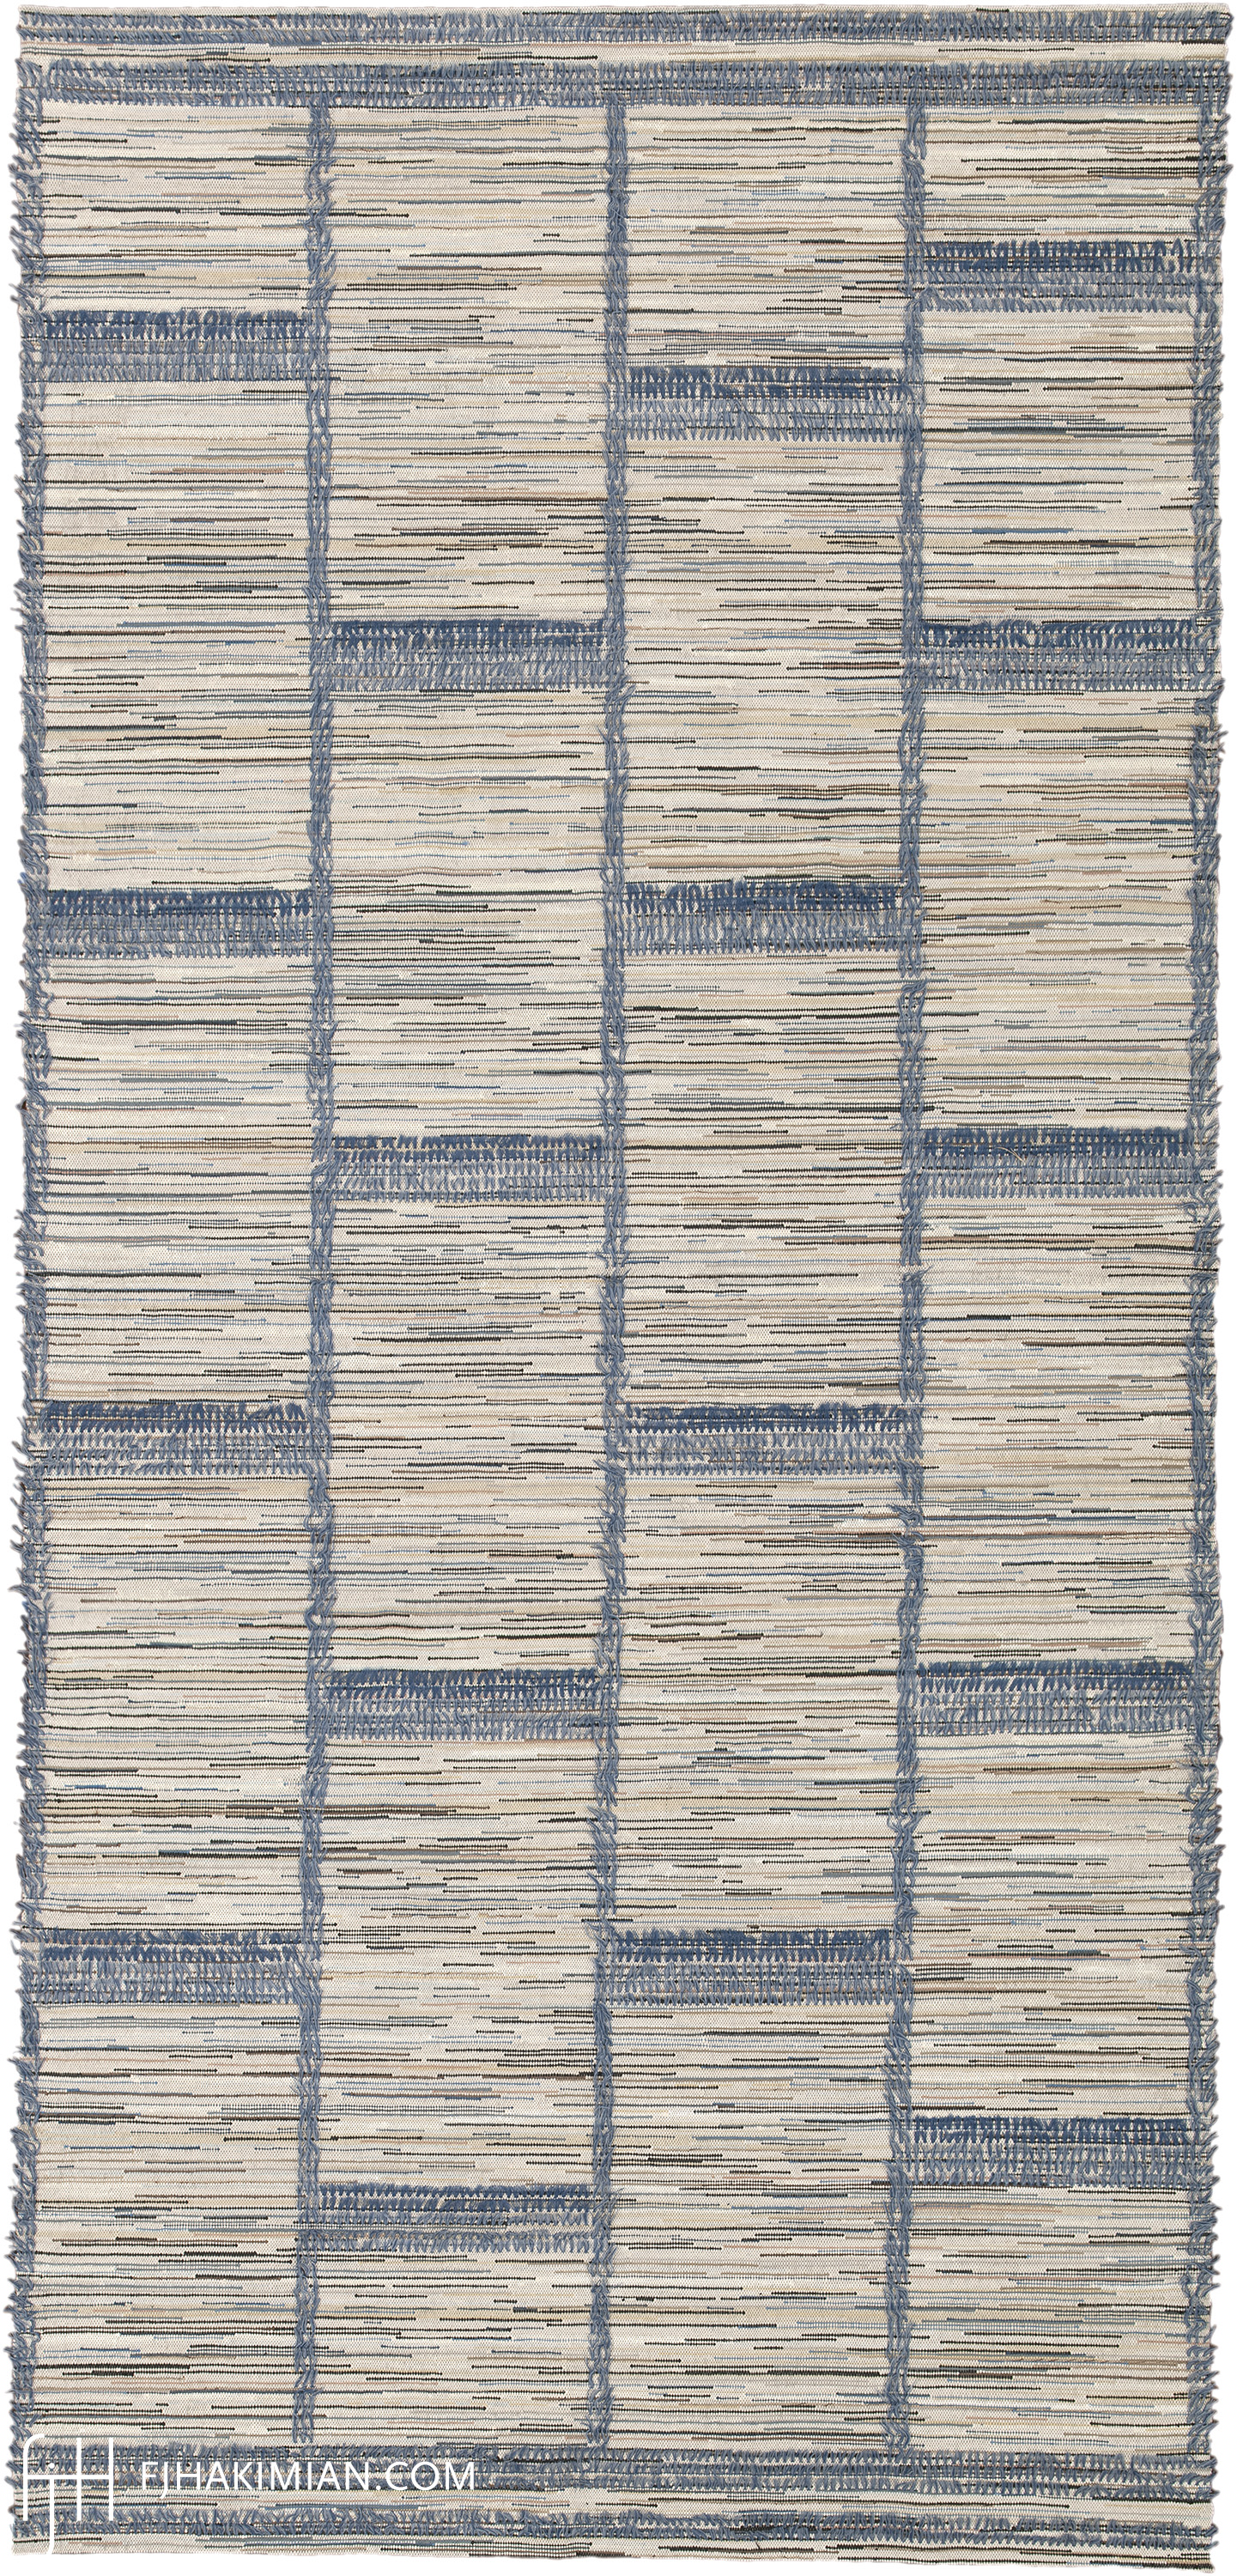 Stromma Design | Custom Swedish Carpet | FJ Hakimian | Carpet Gallery in NY